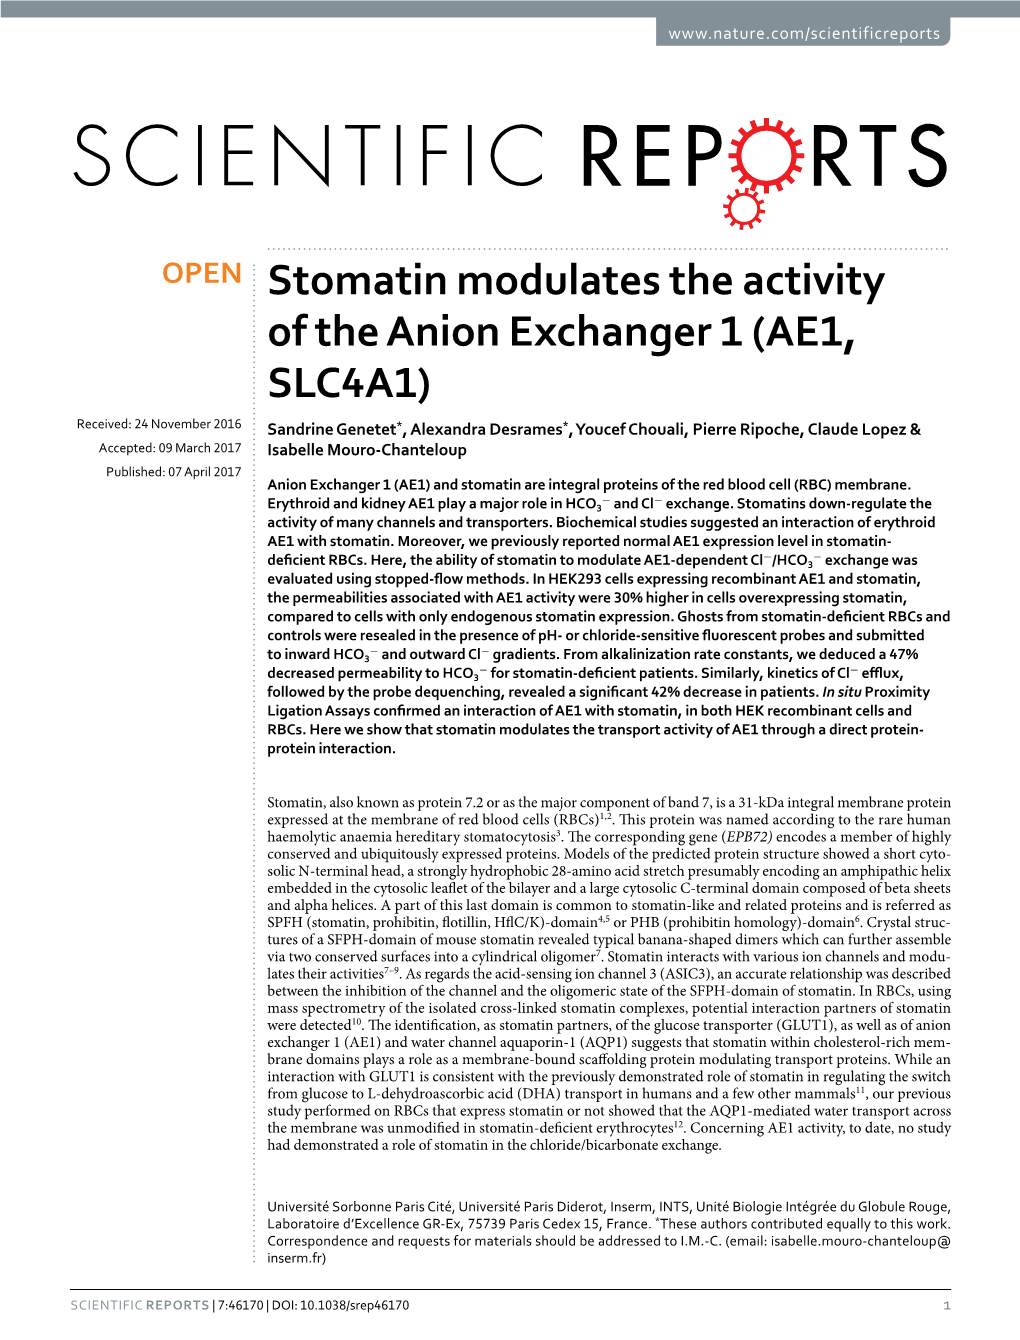 Stomatin Modulates the Activity of the Anion Exchanger 1